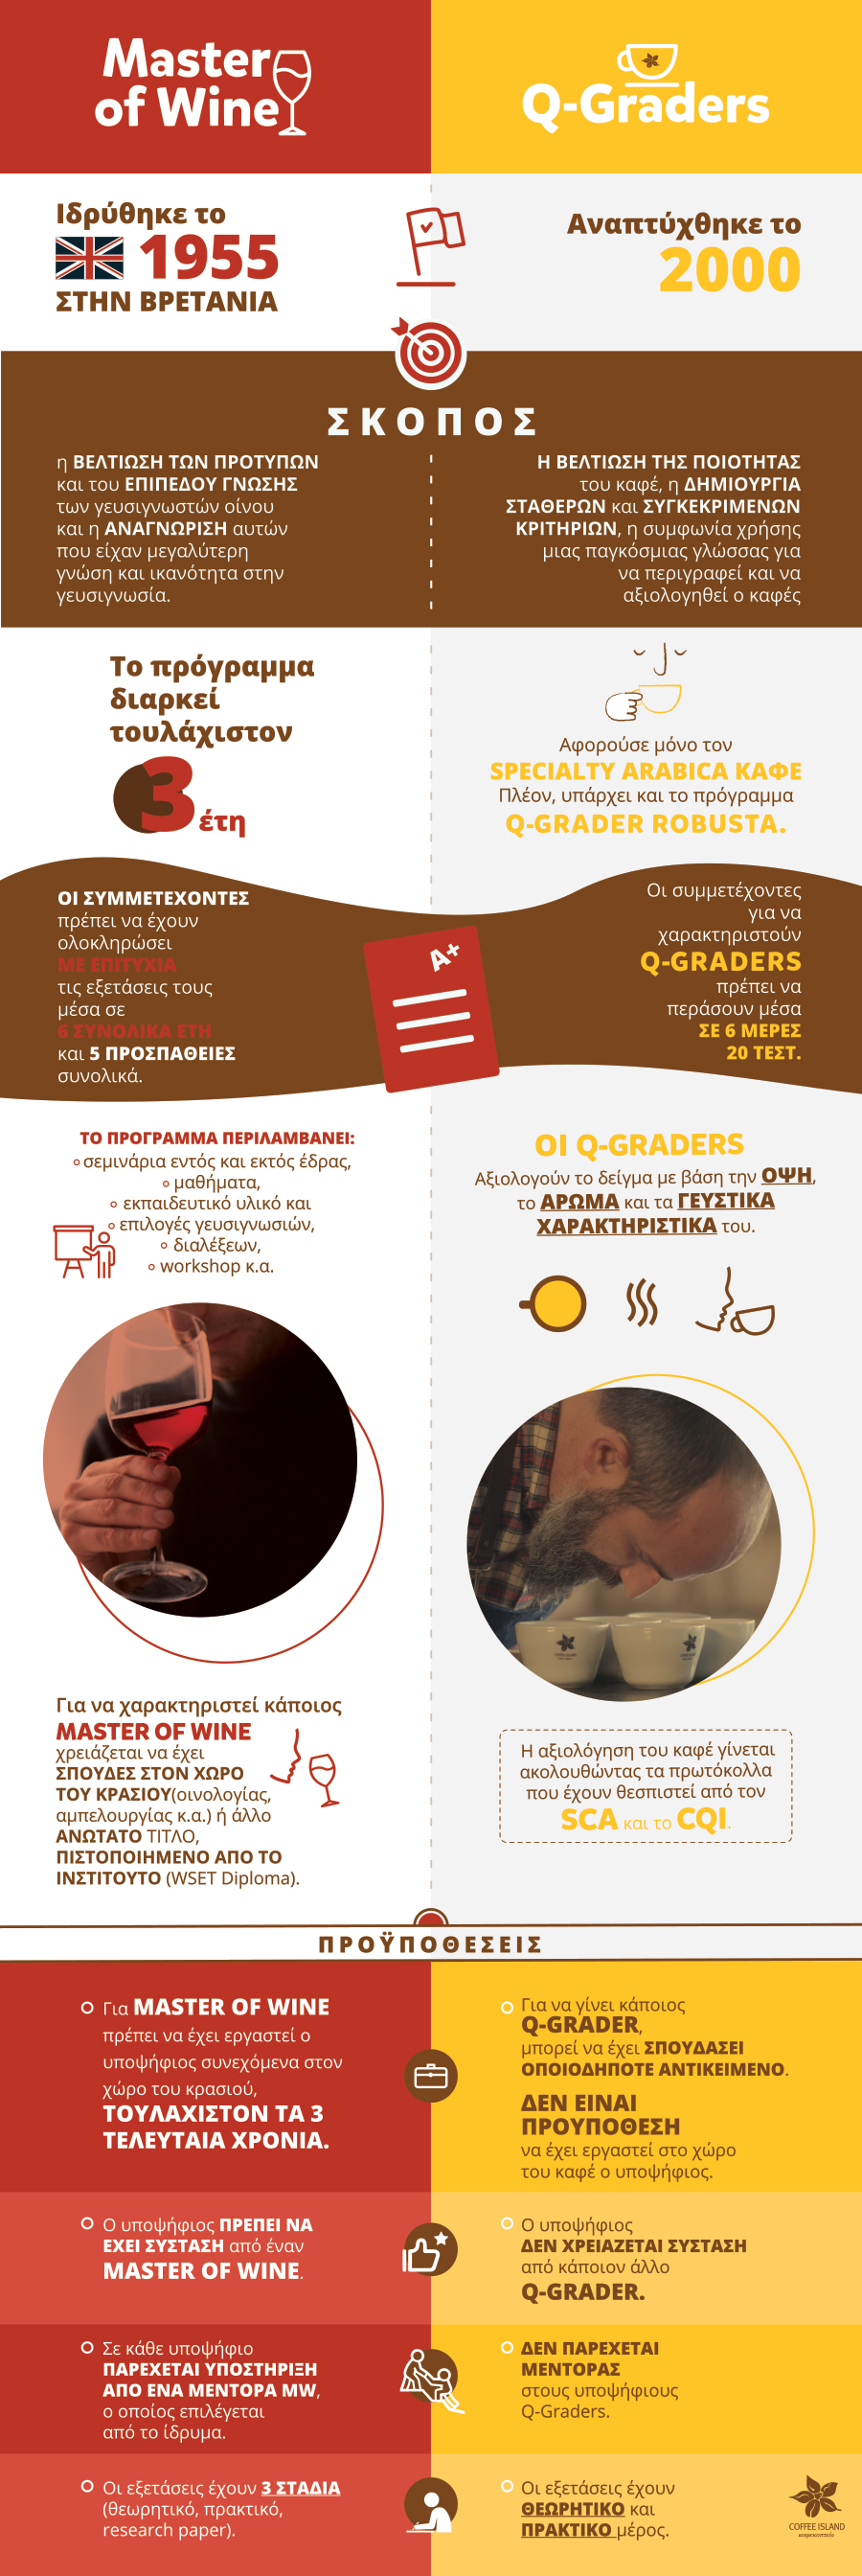 Q-Graders-vs-Master-of-Wine-infographic